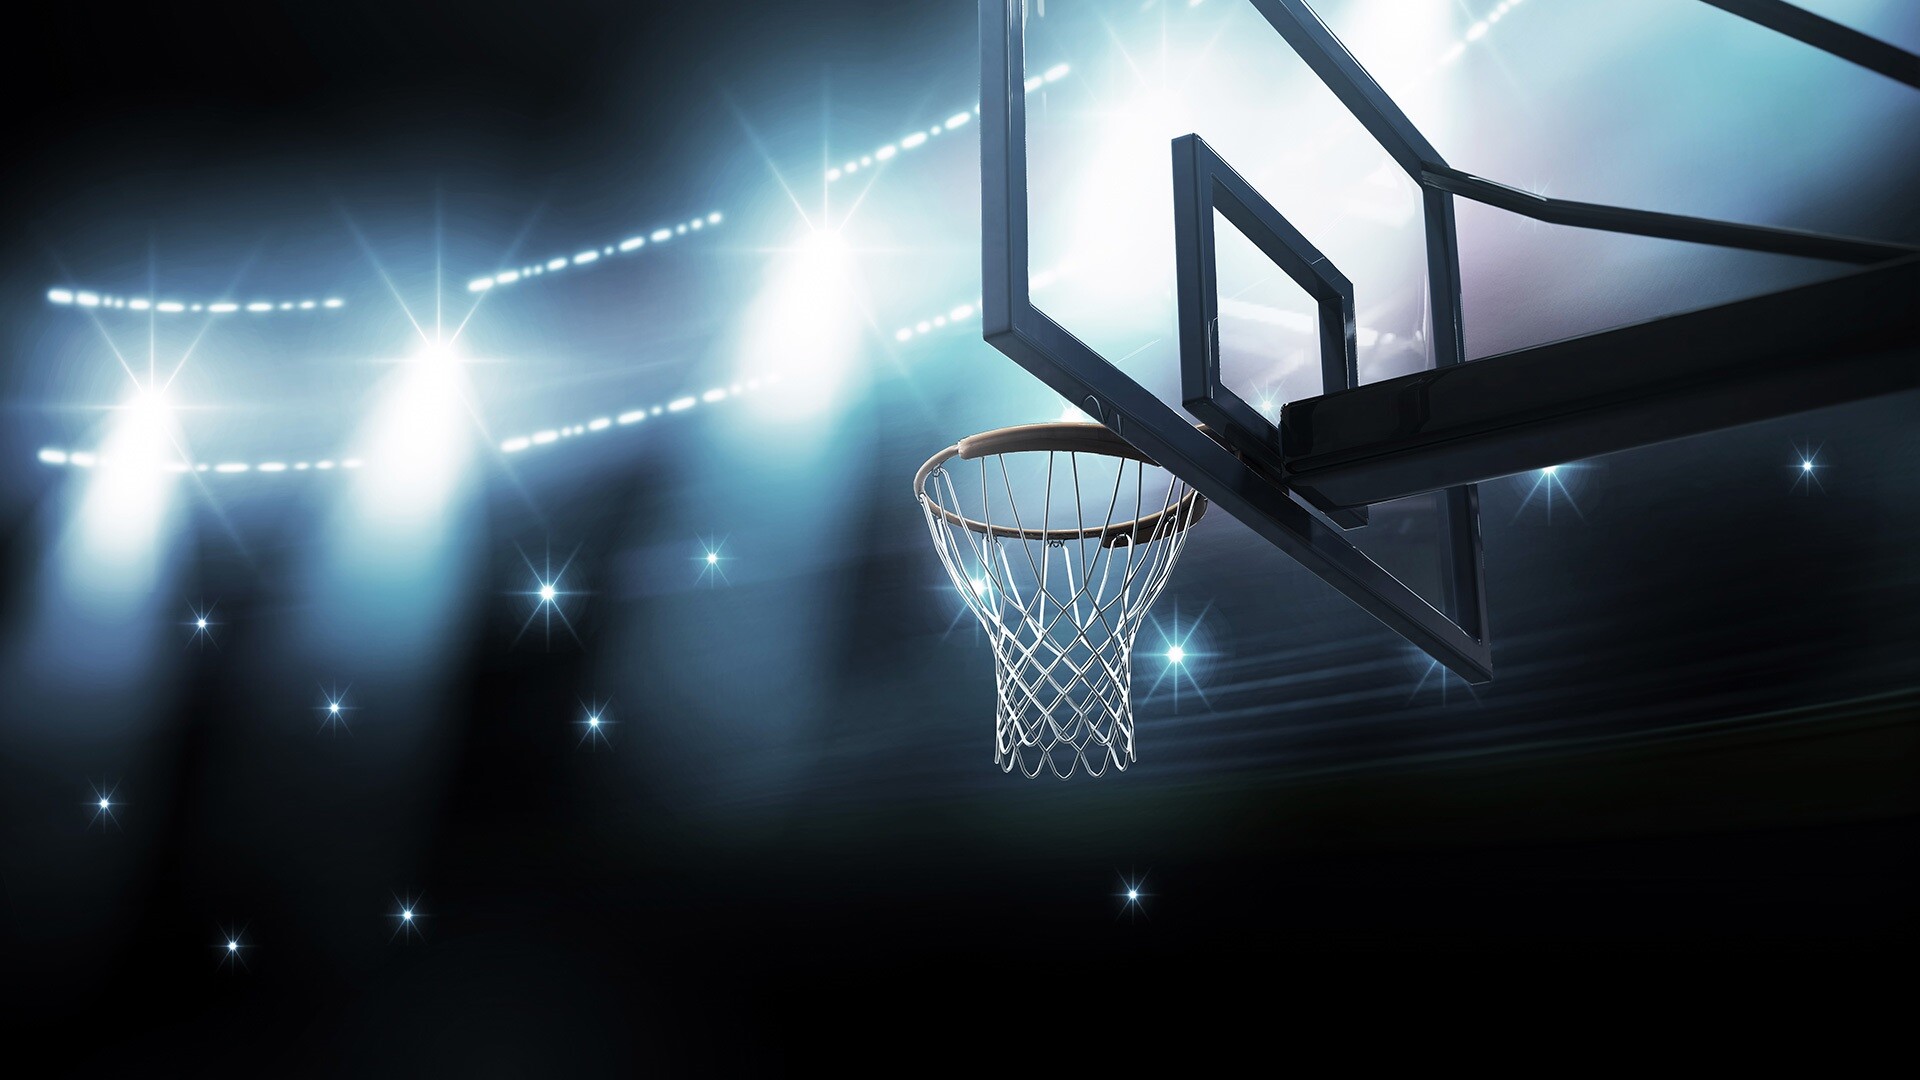 Basketball desktop wallpaper, High-resolution image, Sports enthusiasm, Dynamic gameplay, 1920x1080 Full HD Desktop